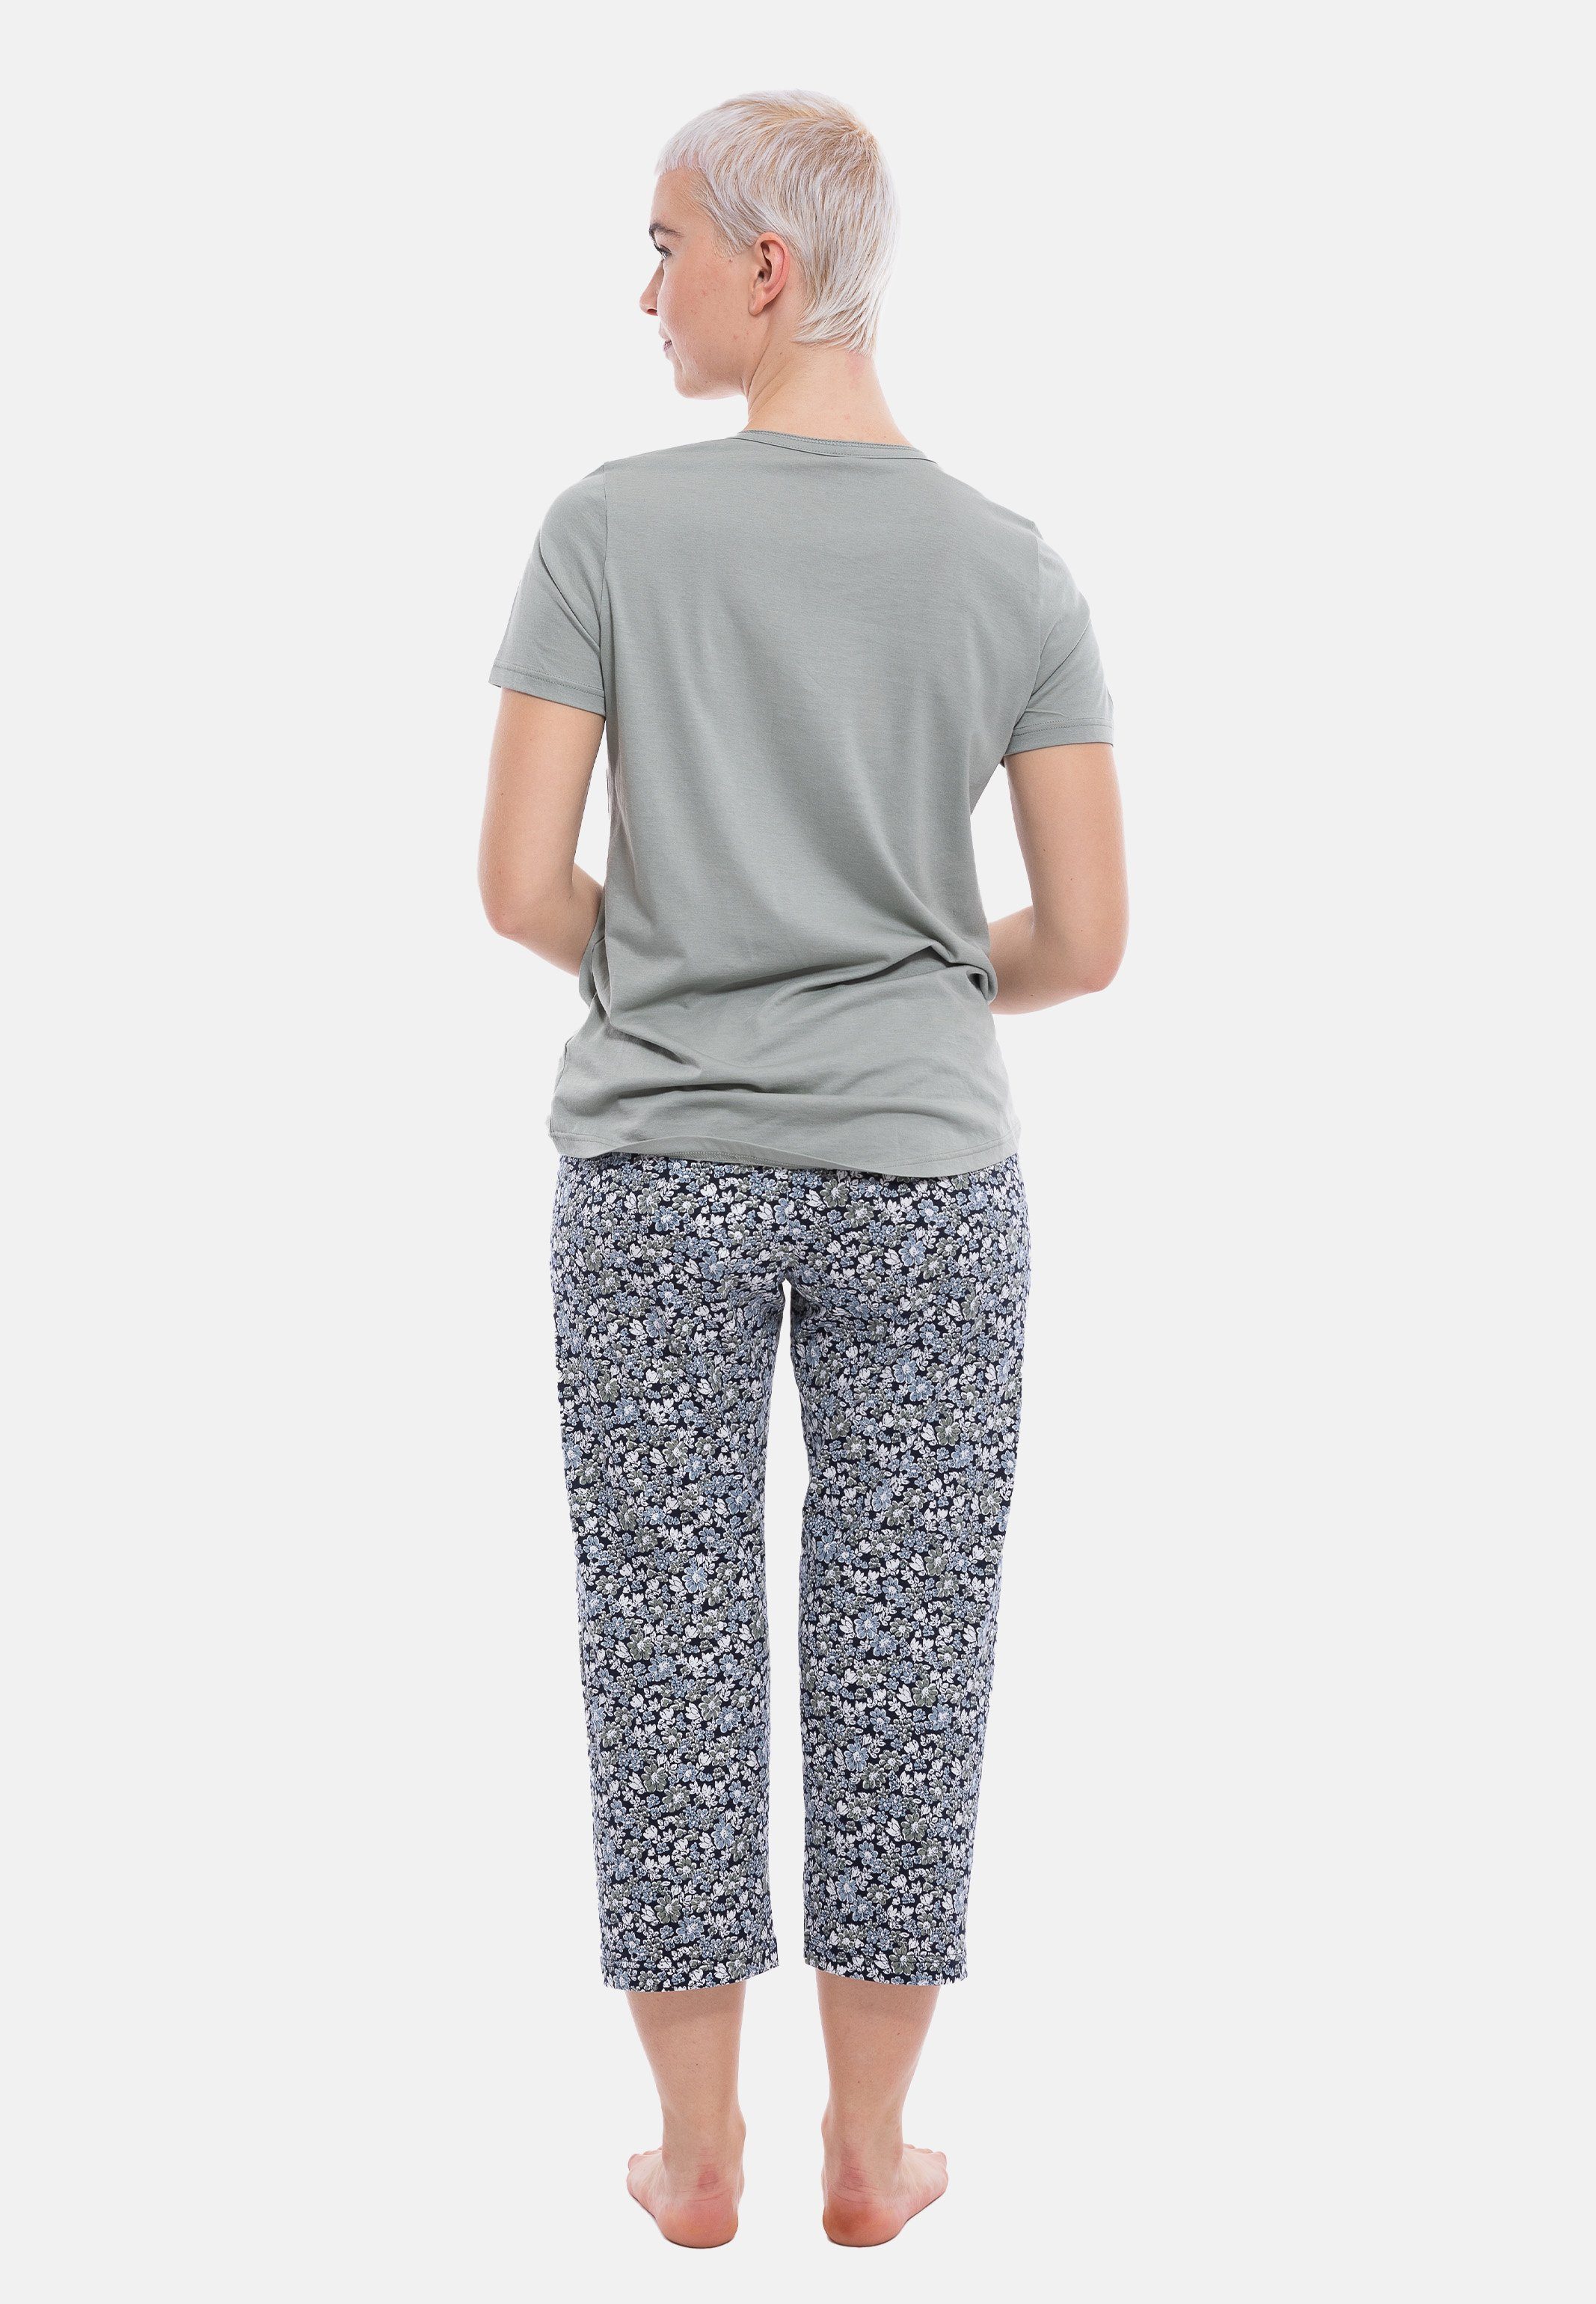 Ammann Pyjama Organic tlg) Cotton Shadow - 2 Baumwolle - Schlafanzug (Set